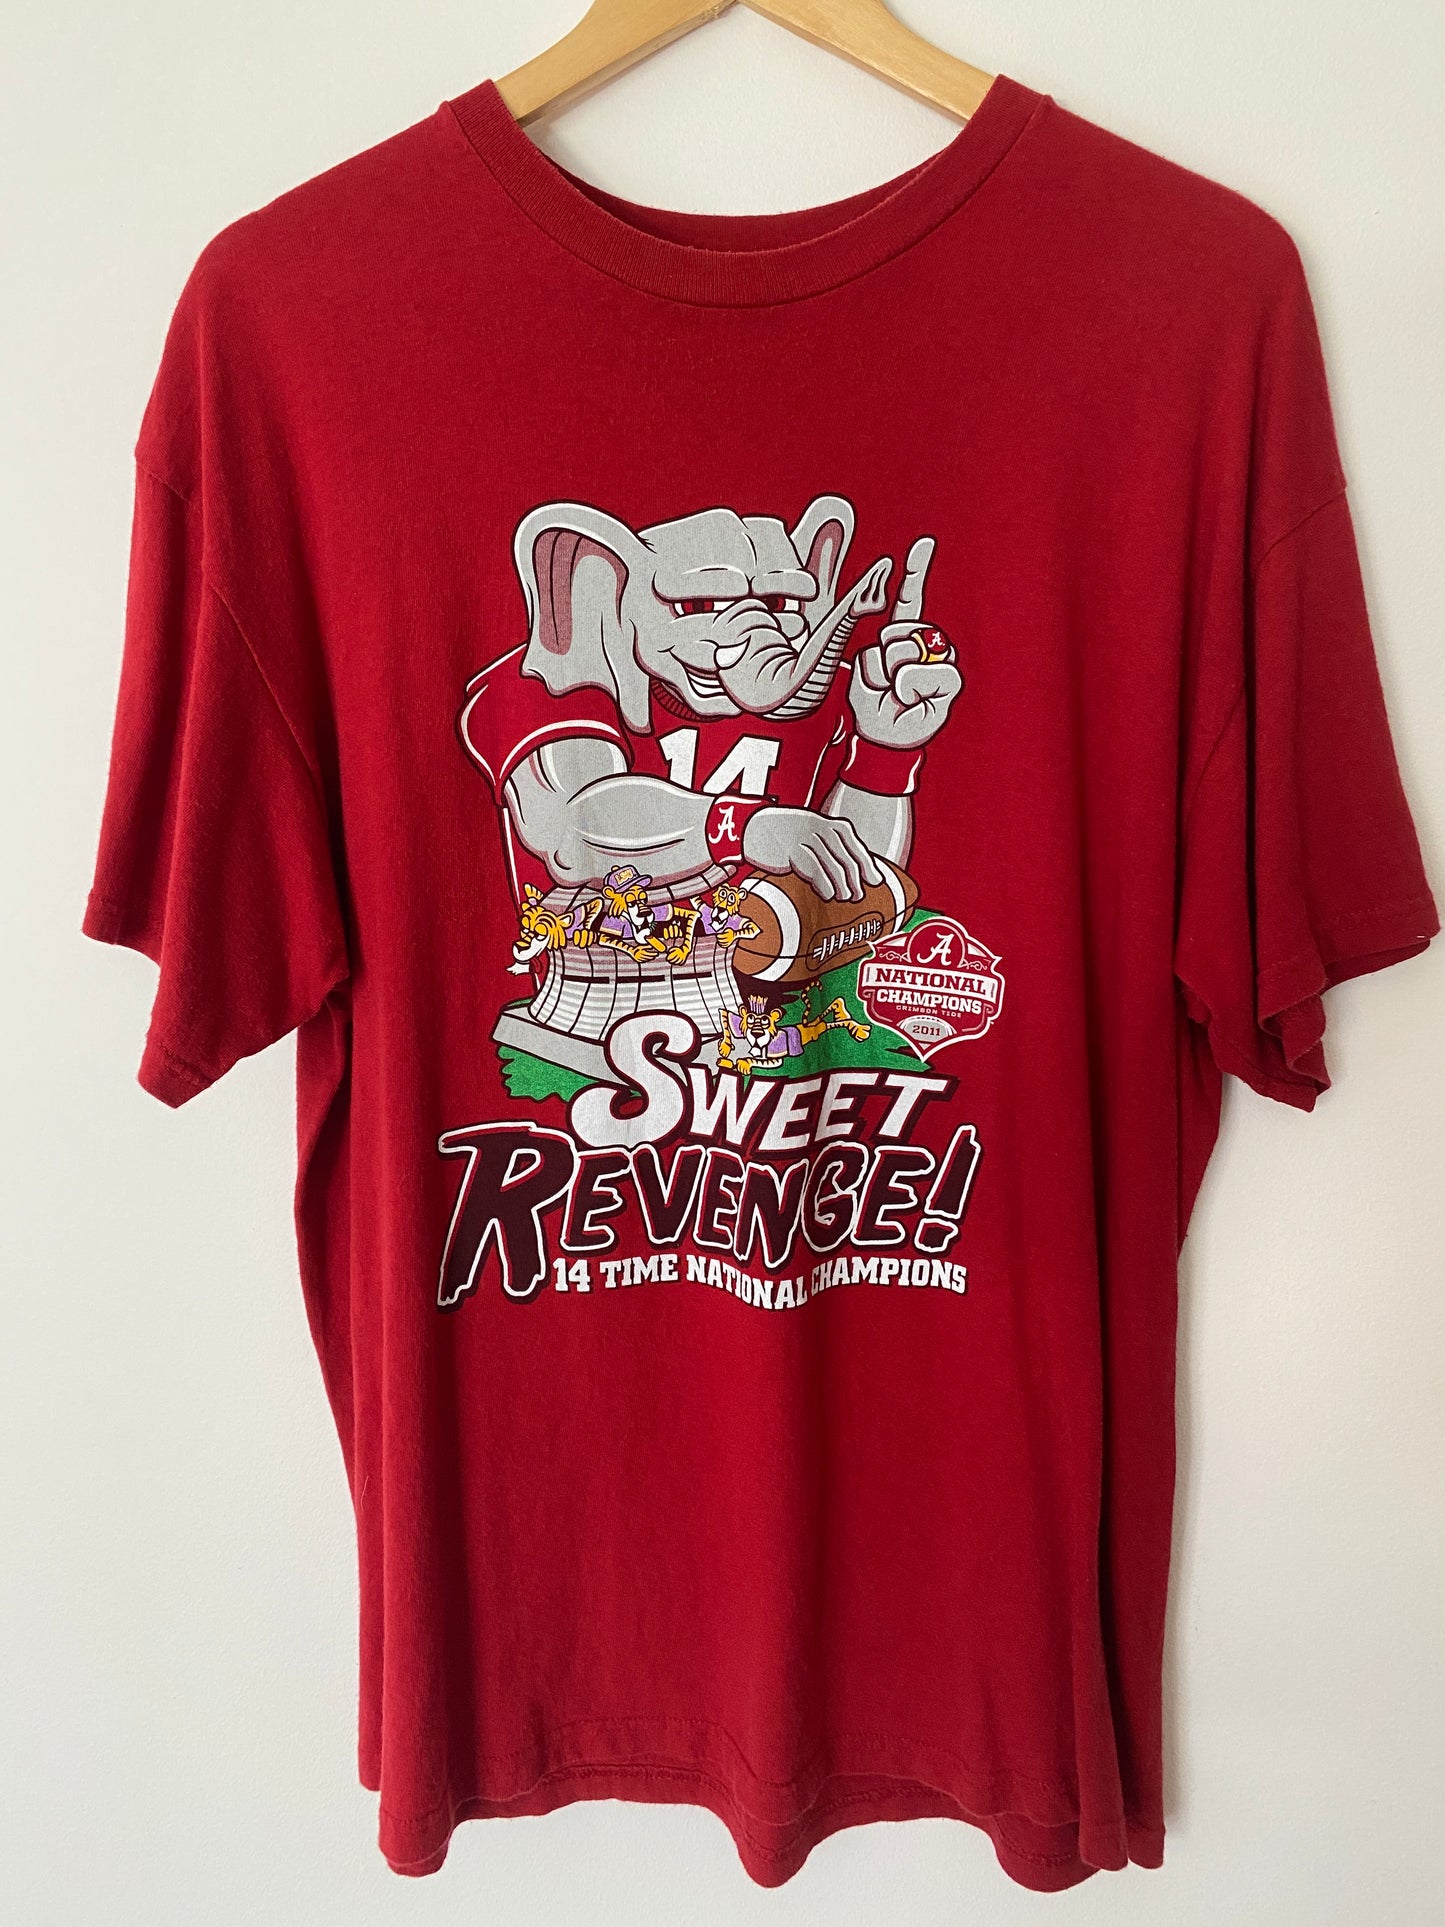 2011 Alabama Crimson Tide Football Champs T-Shirt - XL